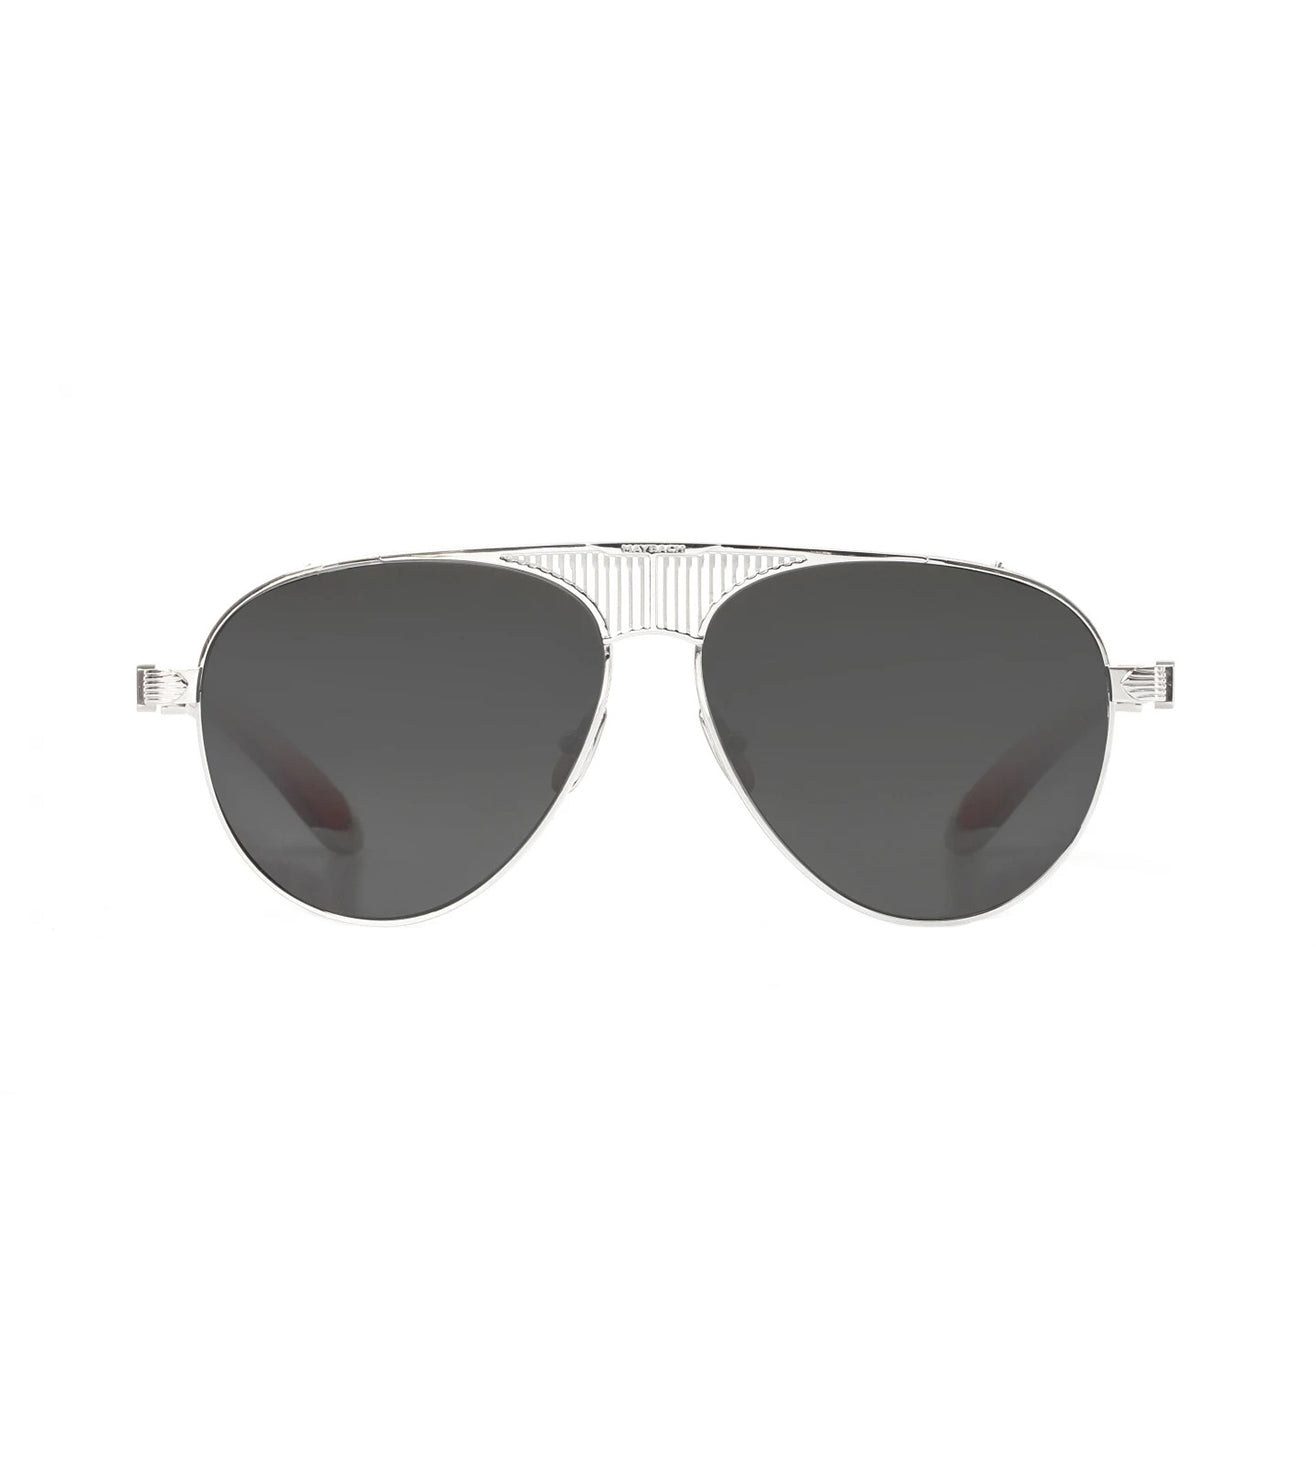 Maybach The Vision - I Men's Black Aviator Sunglasses